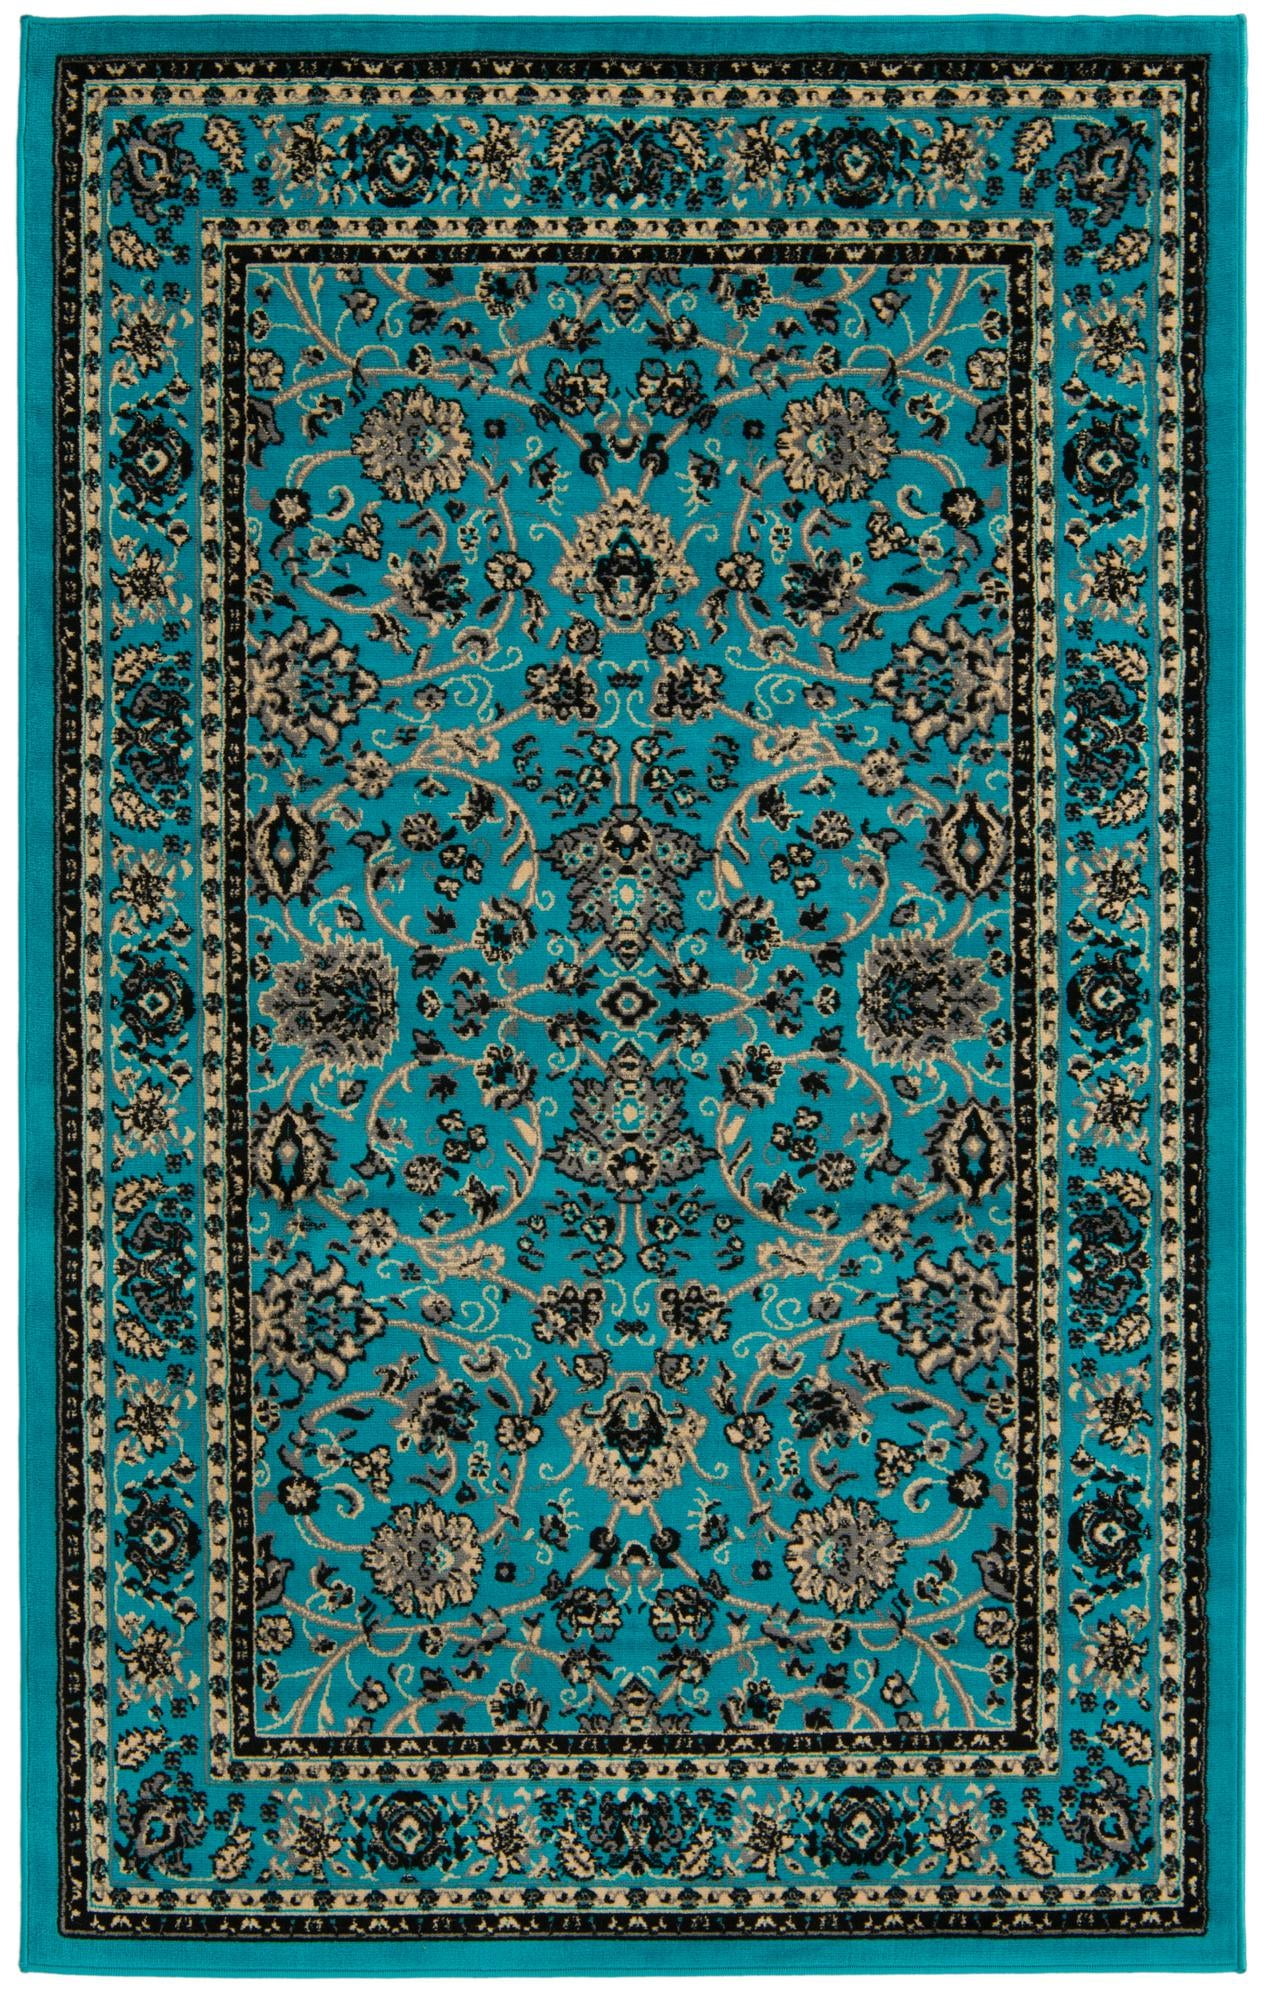 Rugs.com Yasmin Collection Rug – 5' x 8' Turquoise Medium Rug Perfect ...